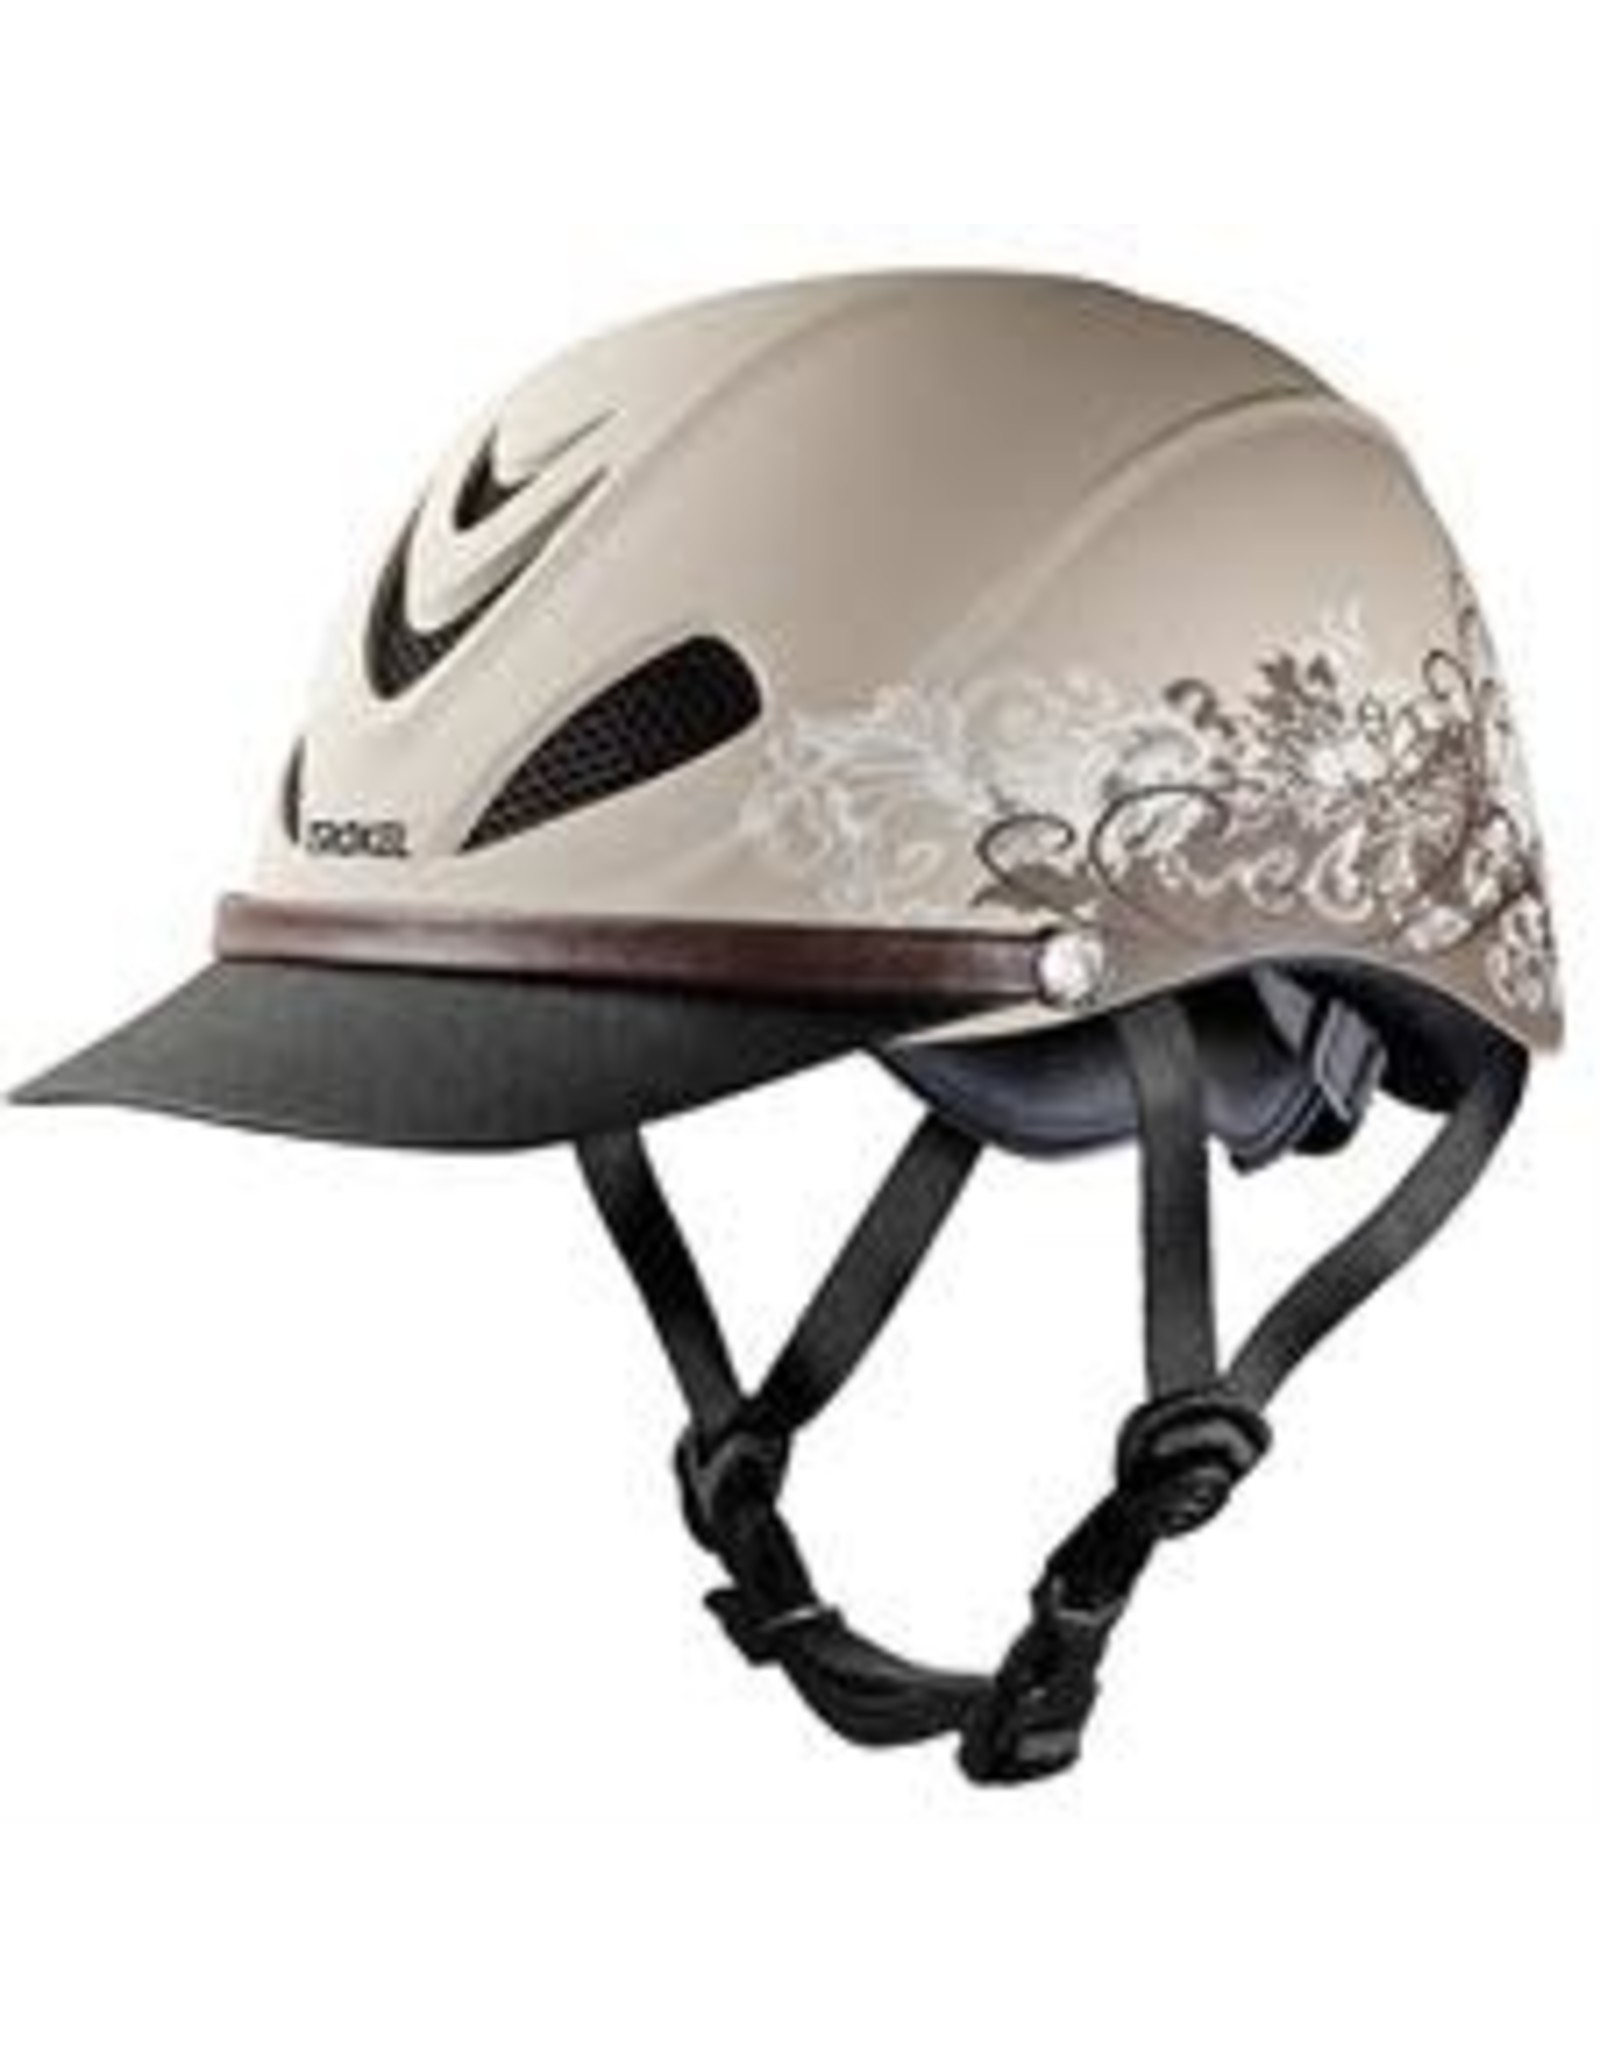 Troxel Dakota Lightweight Trail Helmet